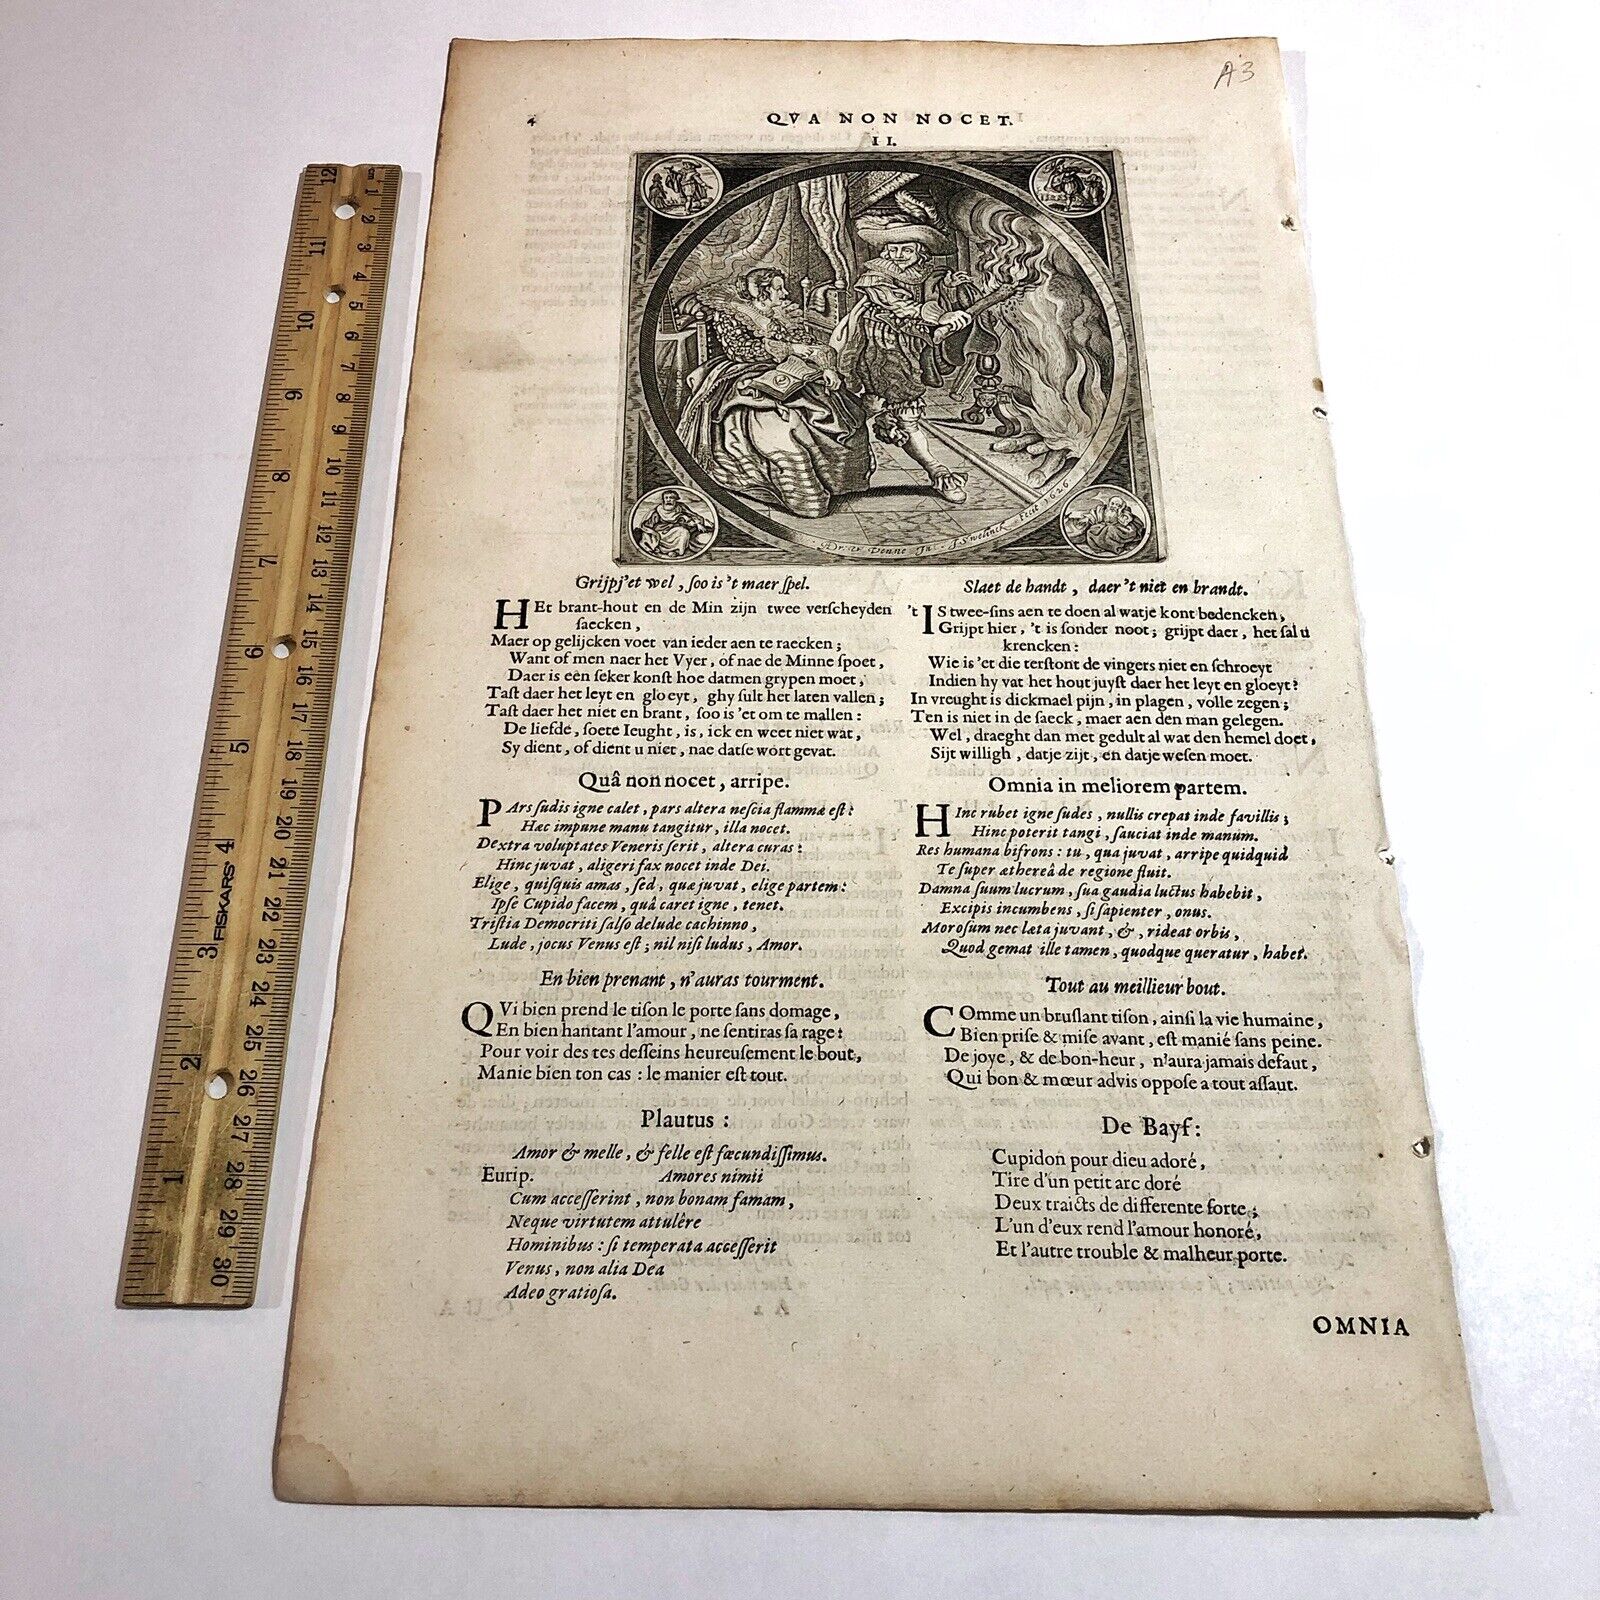 RARE 1658 Jacob Cats “Alle De Wercken” Folio Leaf With Engraving - Amsterdam - A